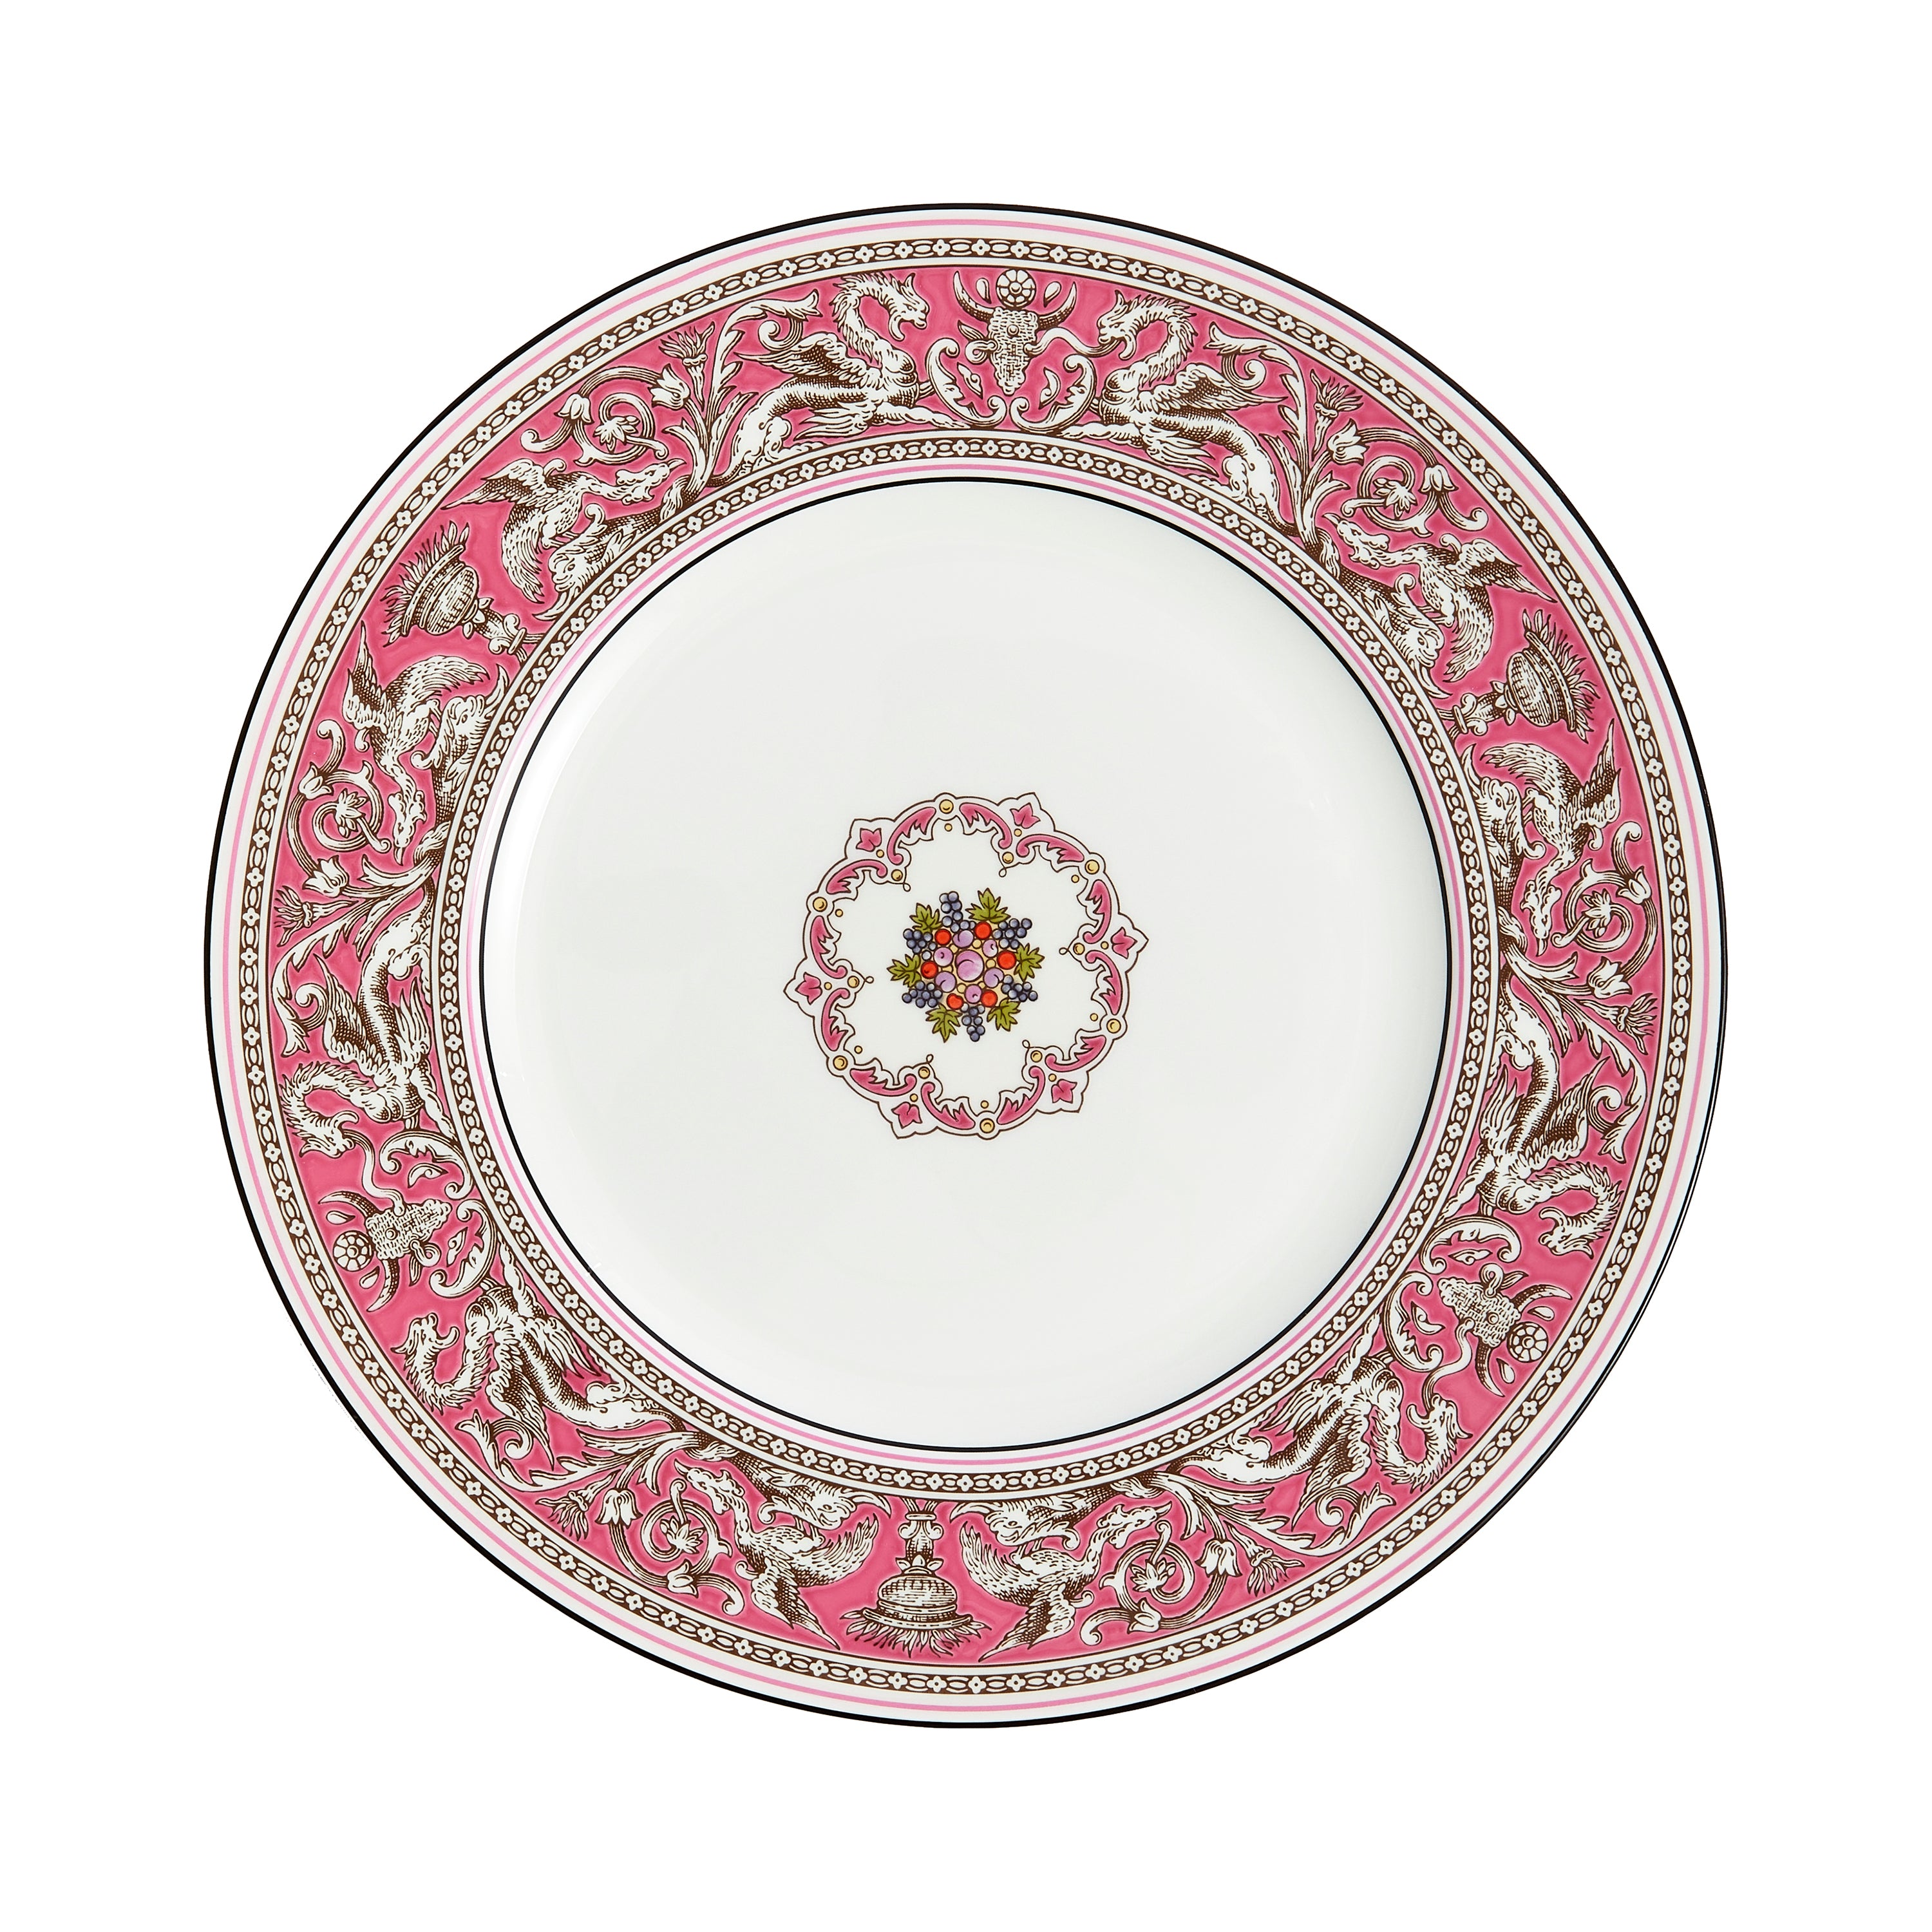 Florentine Dinner Plate